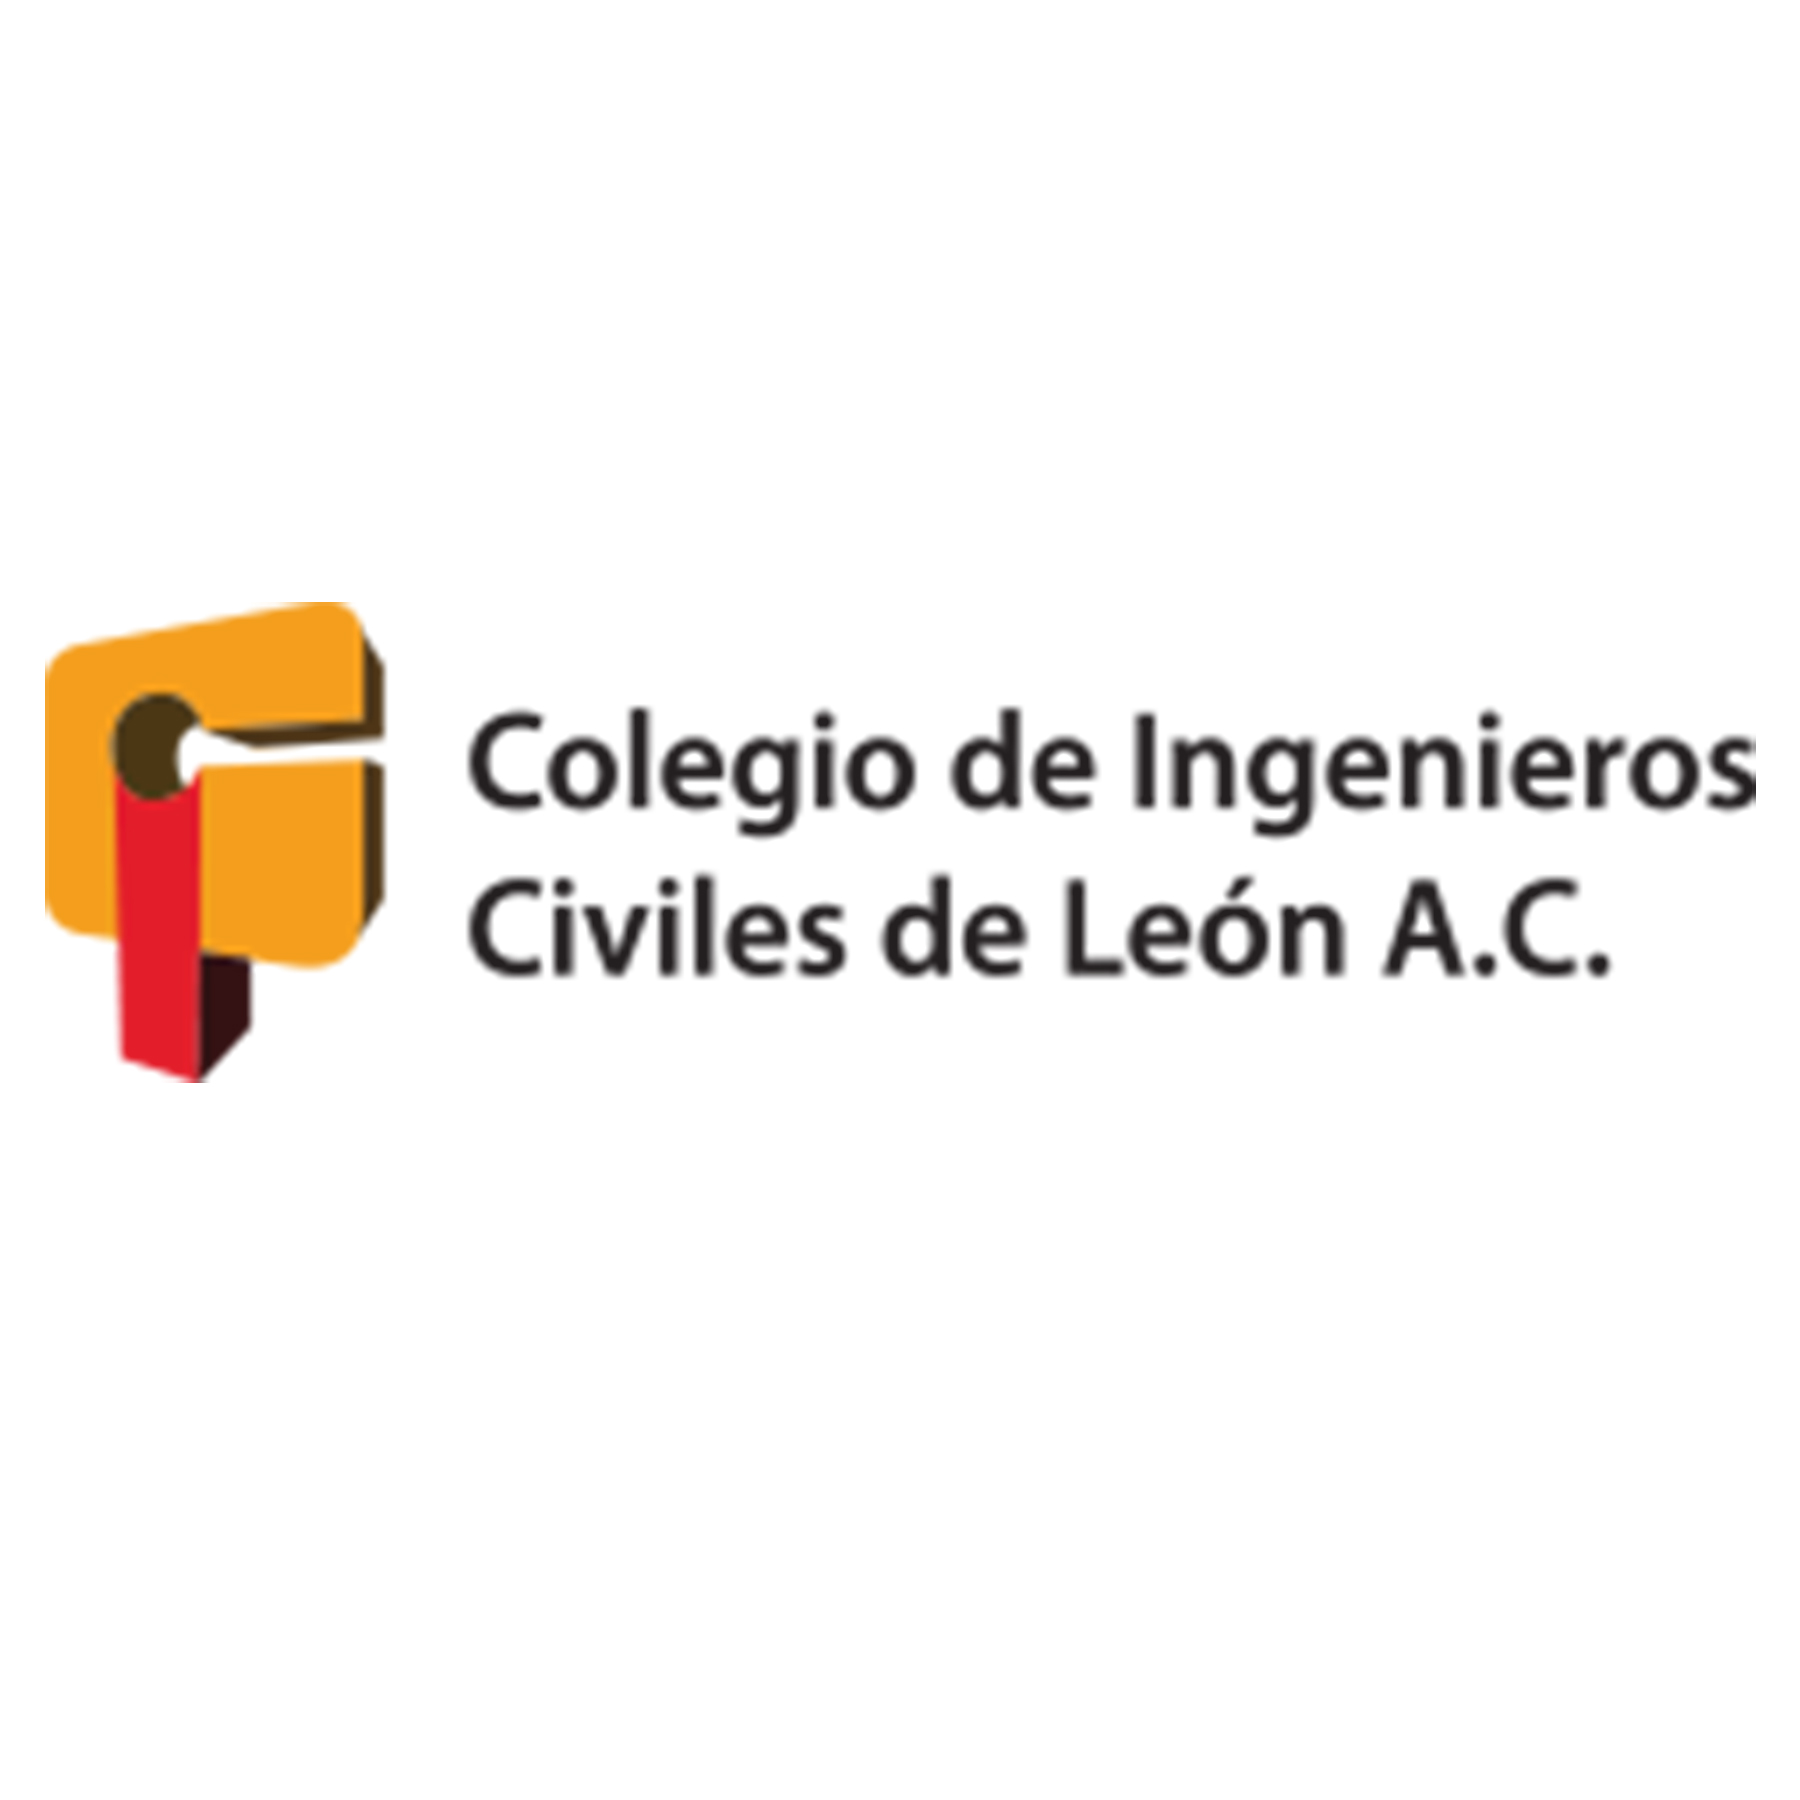 Colegio de Indenieros Civiles de Leon A.C.